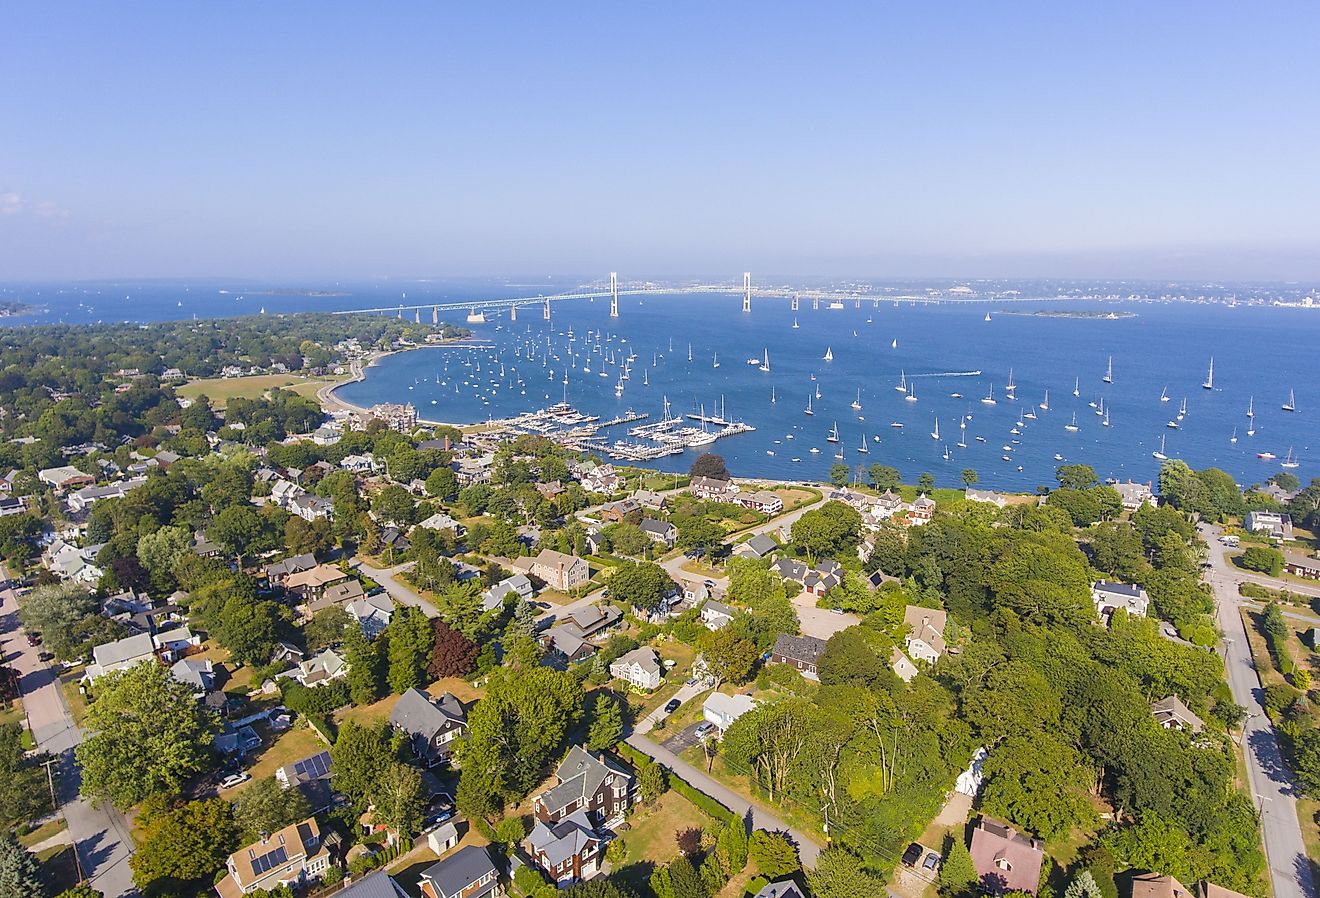 Aerial view of Claiborne Pell Newport Bridge on Narragansett Bay and town of Jamestown, Rhode Island.